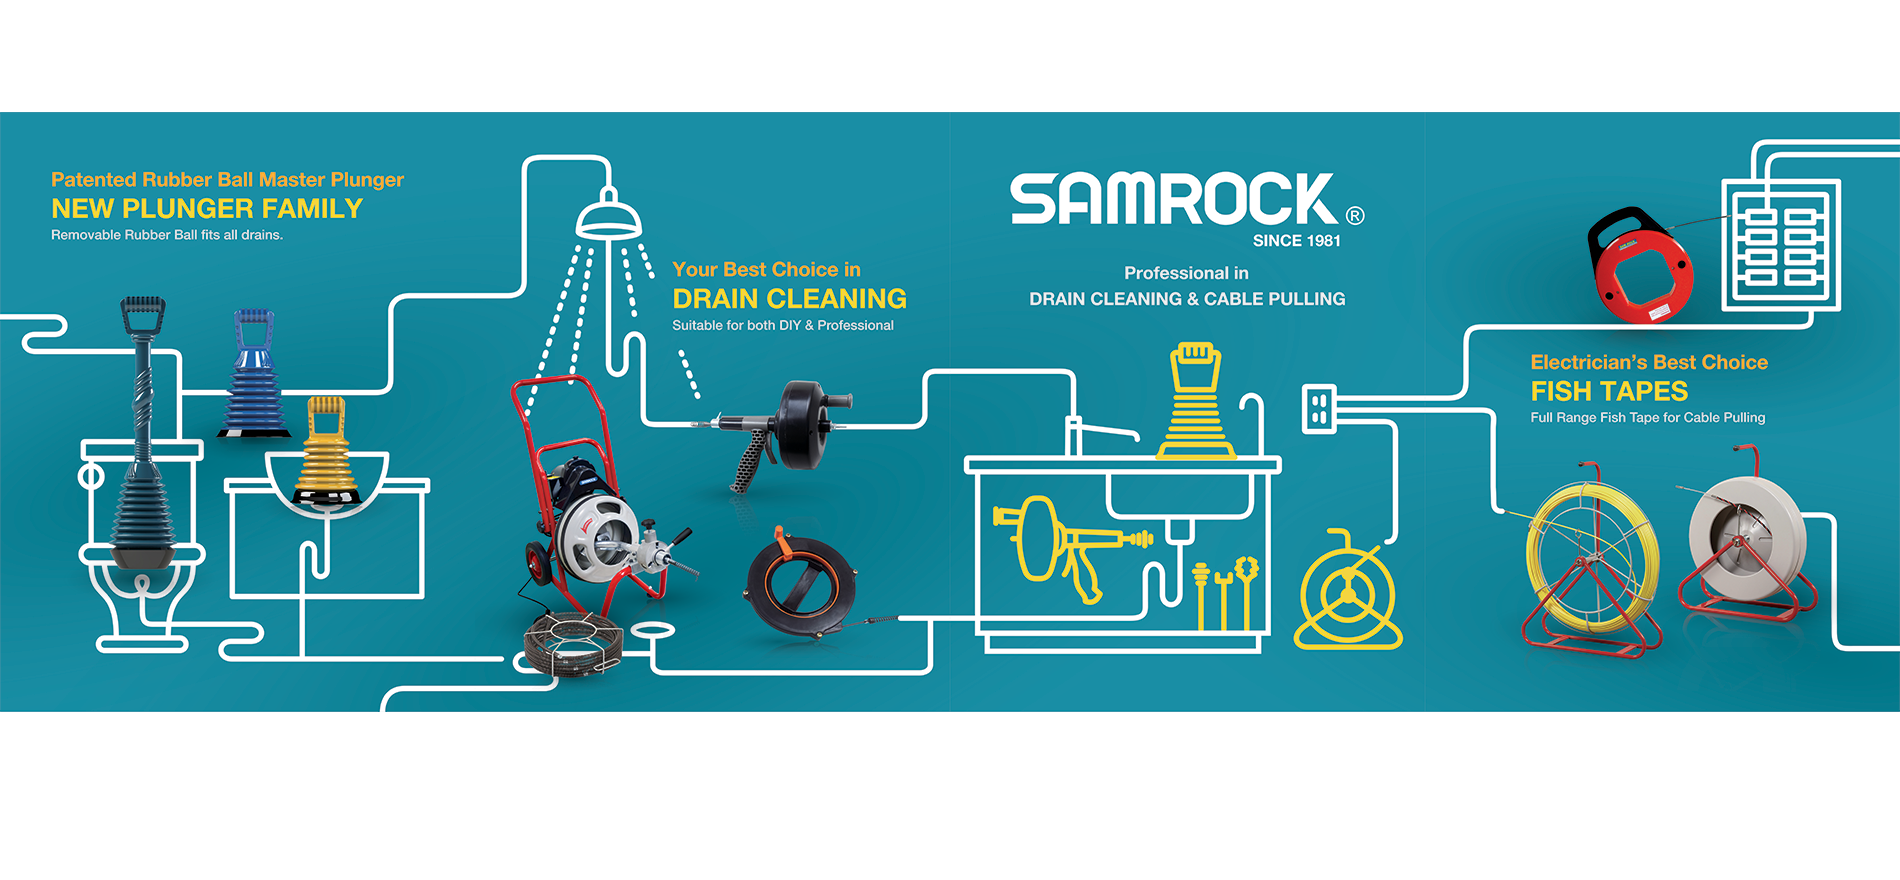 Samrock Poster Banner 2020